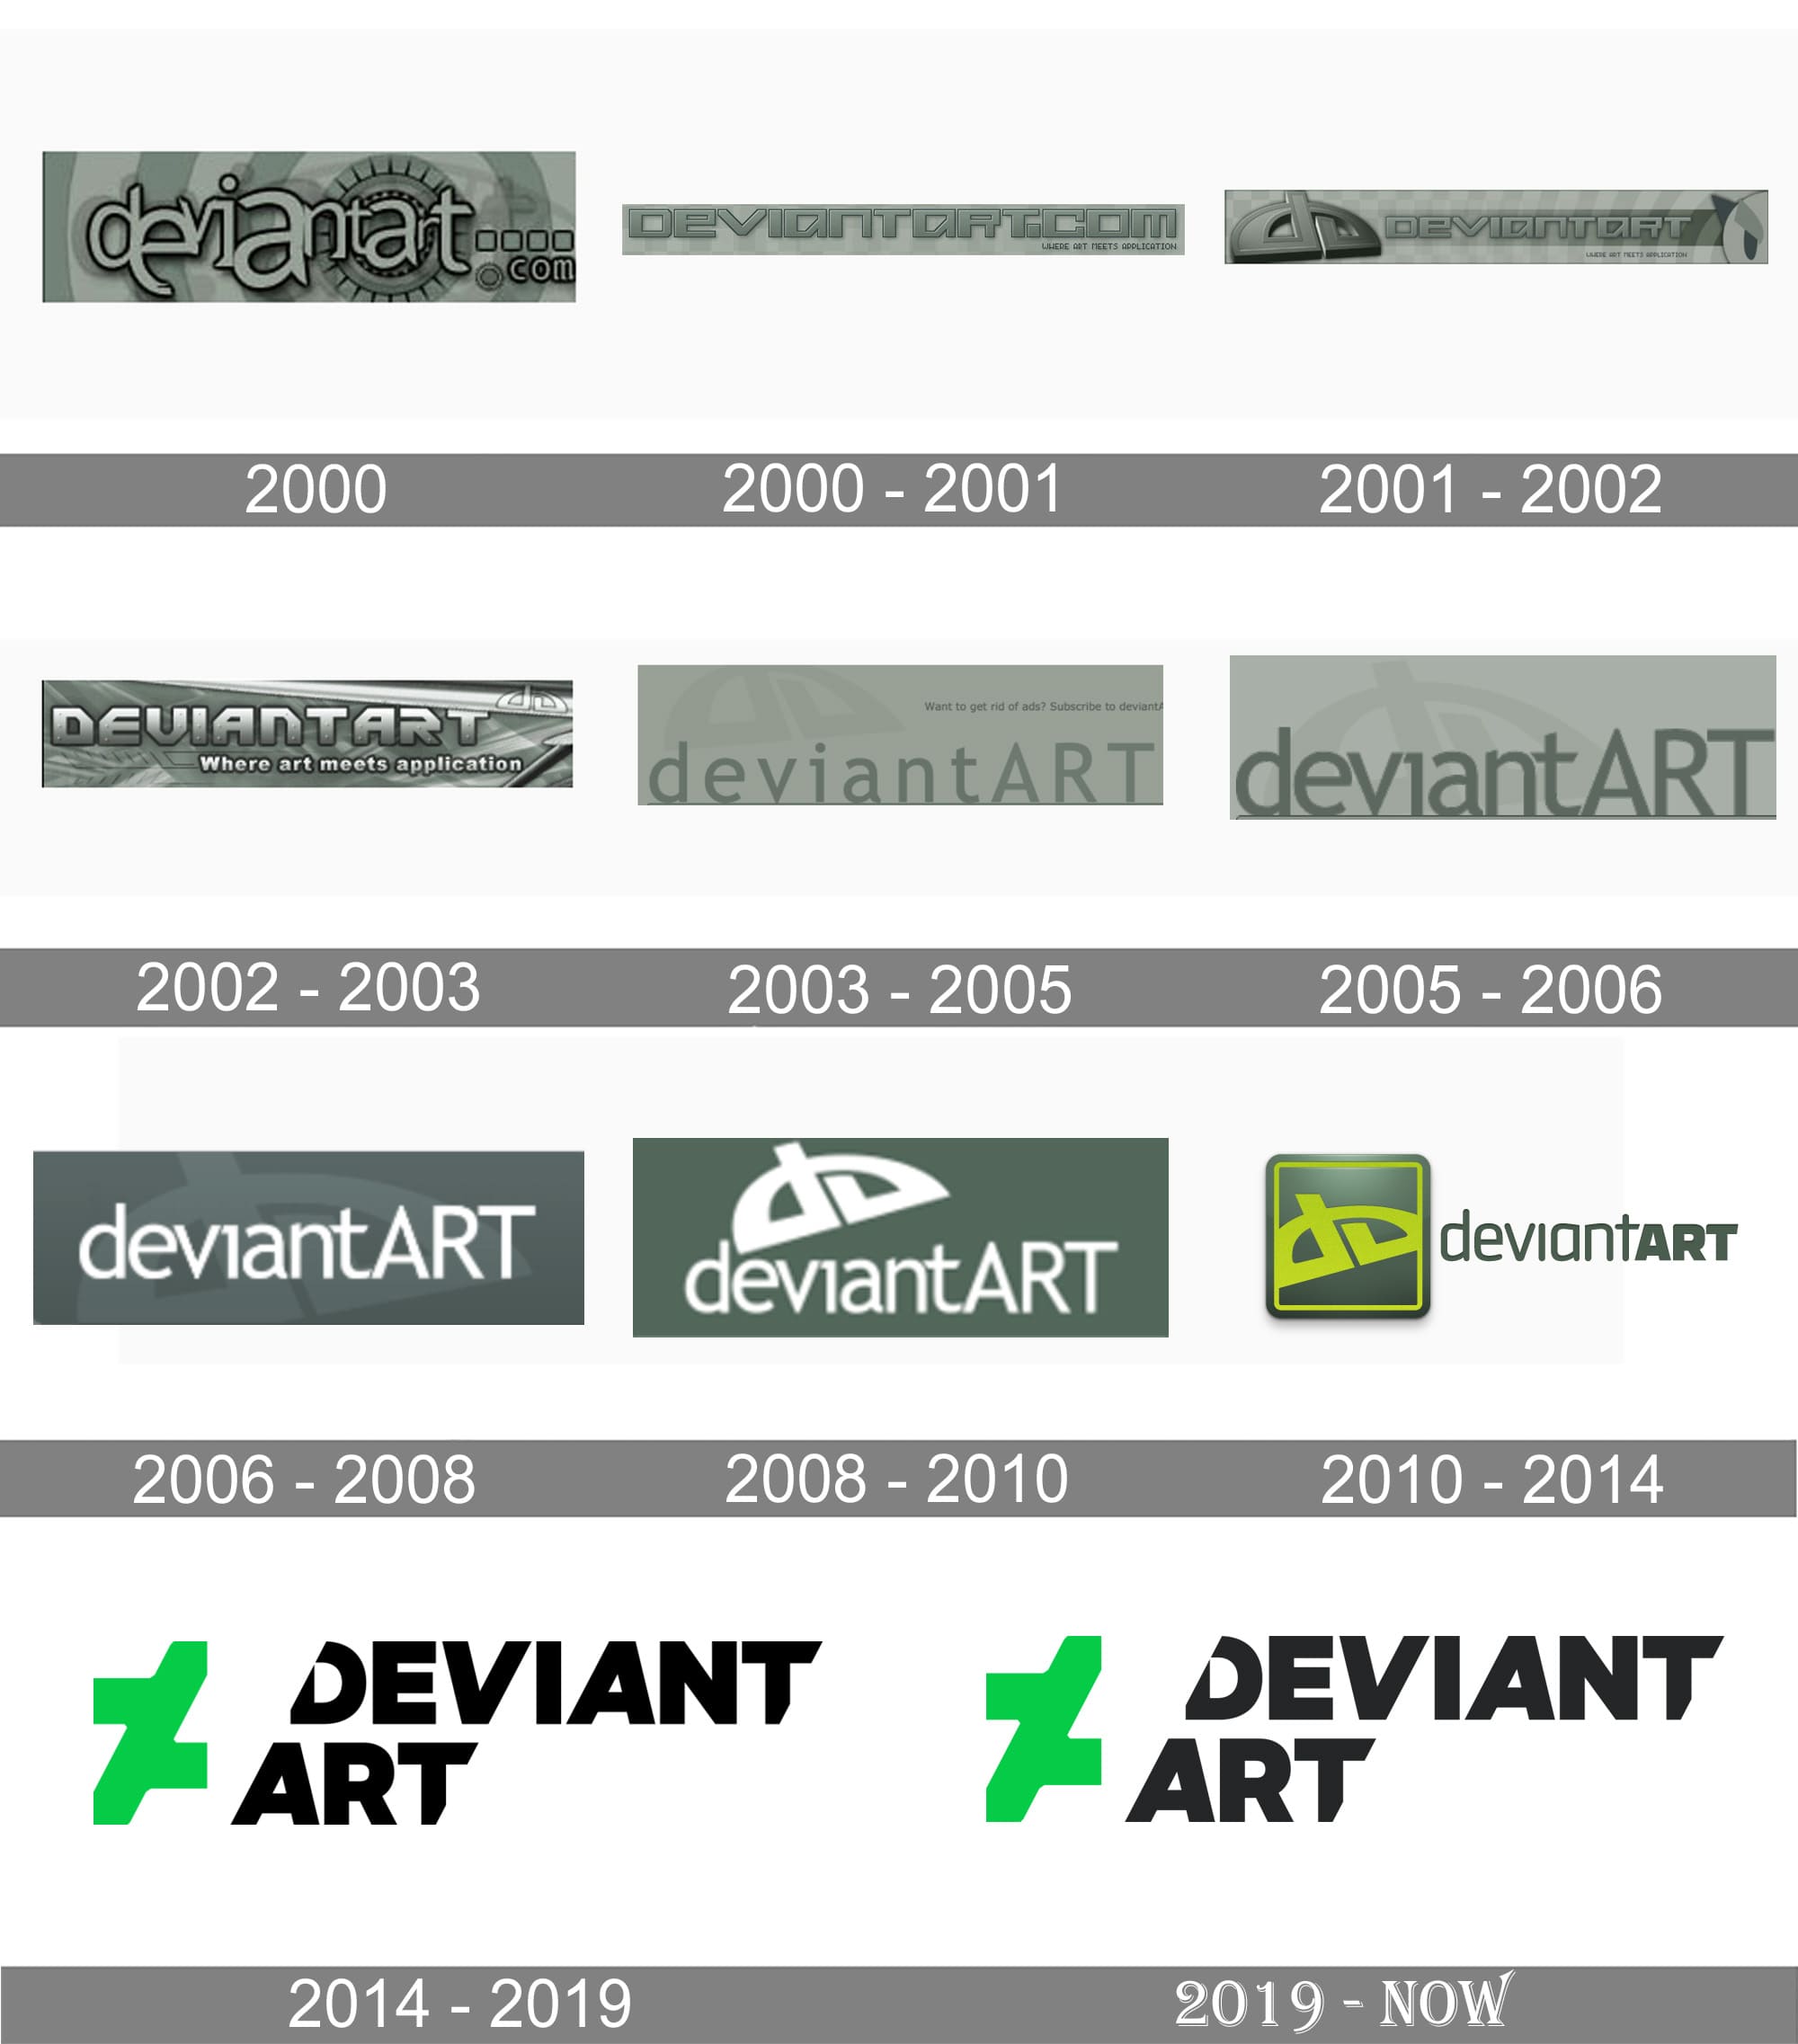 LV Logo pattern by Jon--s on DeviantArt